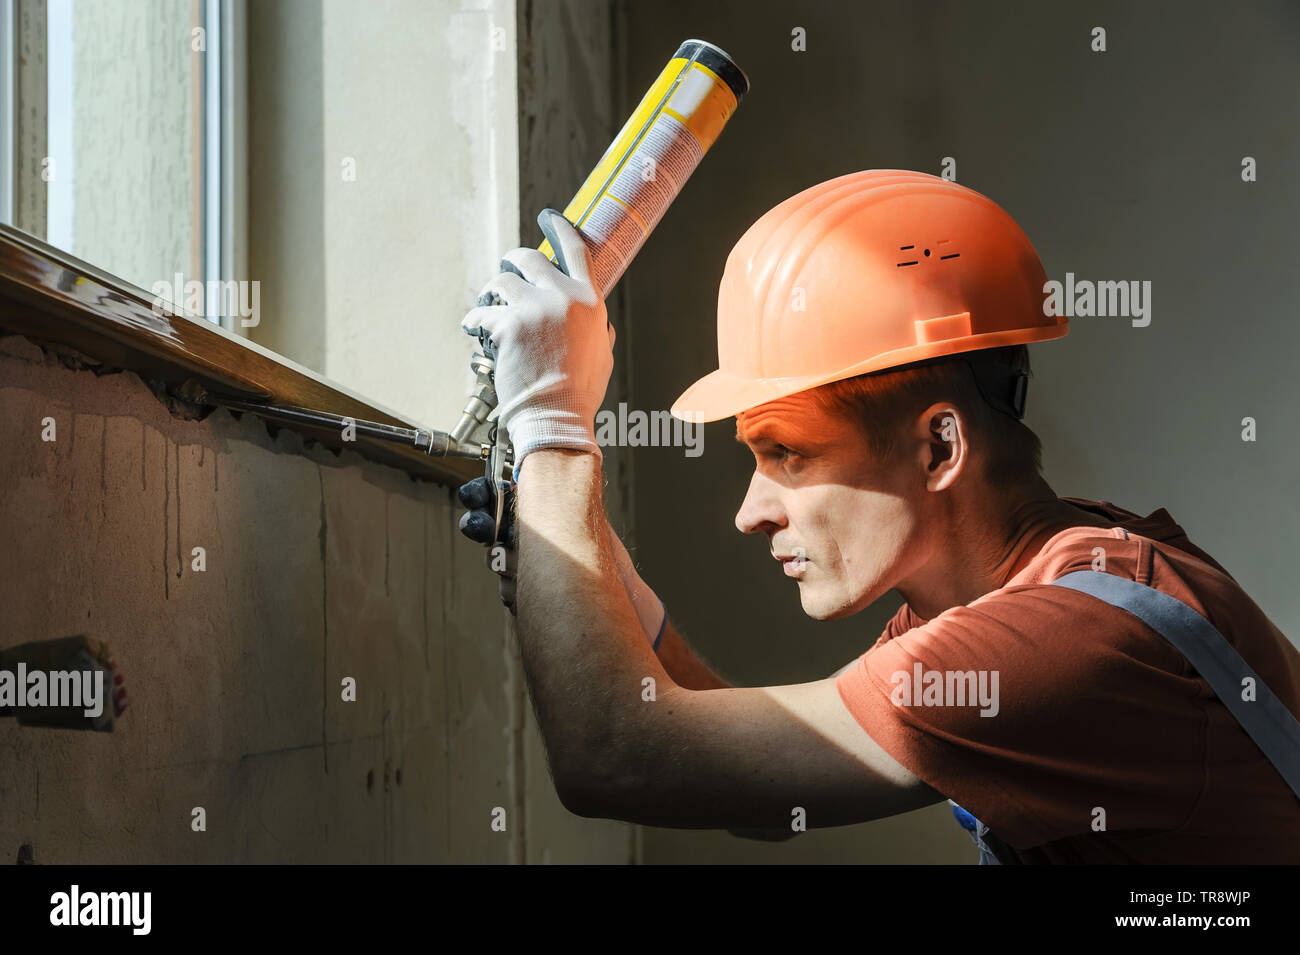 Construction Mounting PU Foam Stock Image - Image of installation,  insulation: 115900919